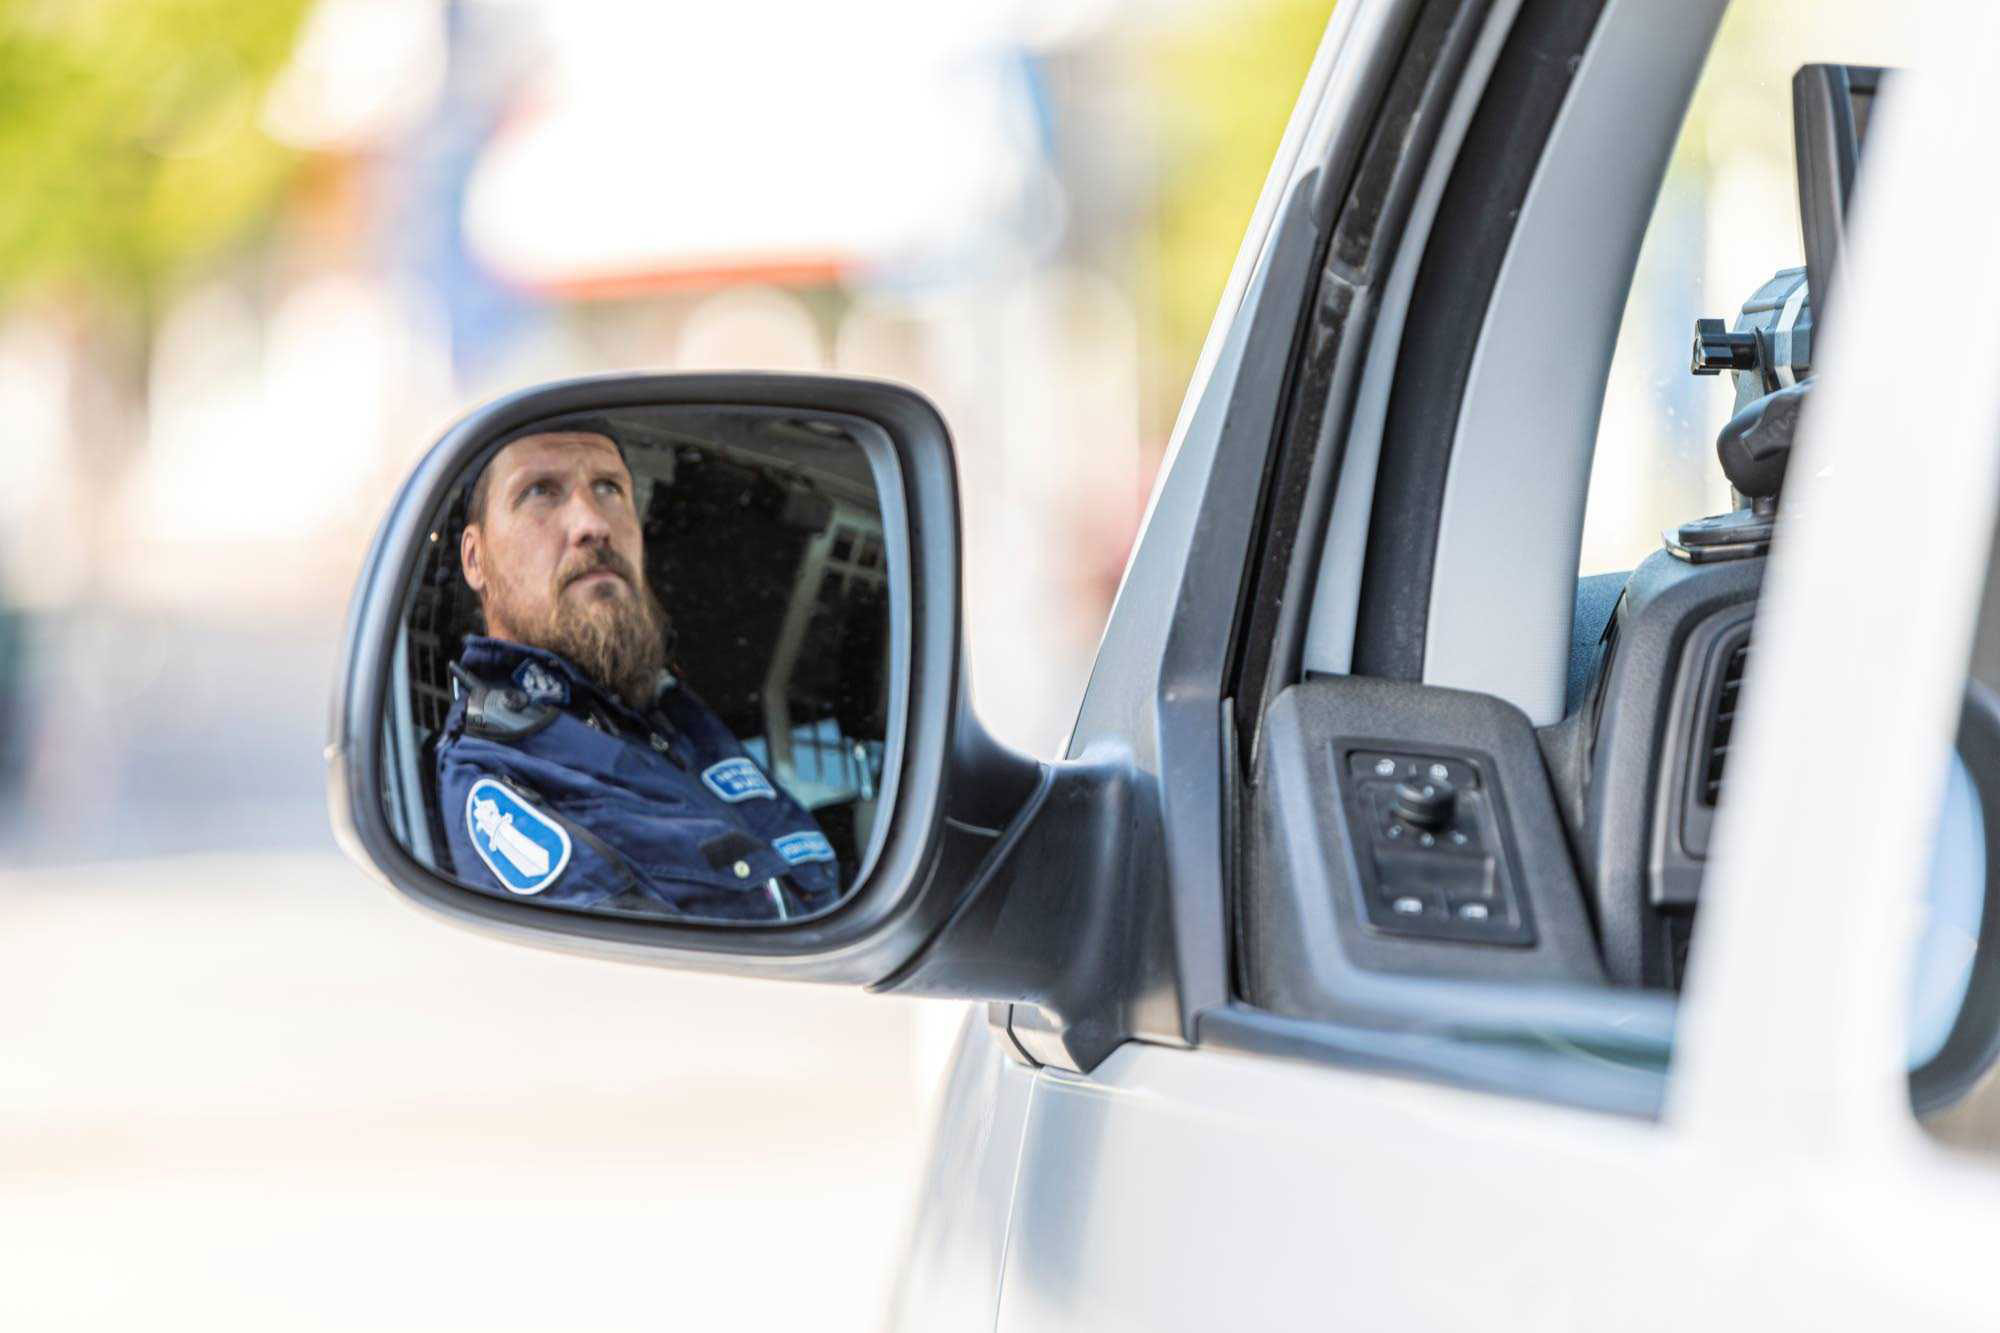 En konstapels ansikte skymtar i en polisbils sidospegel.